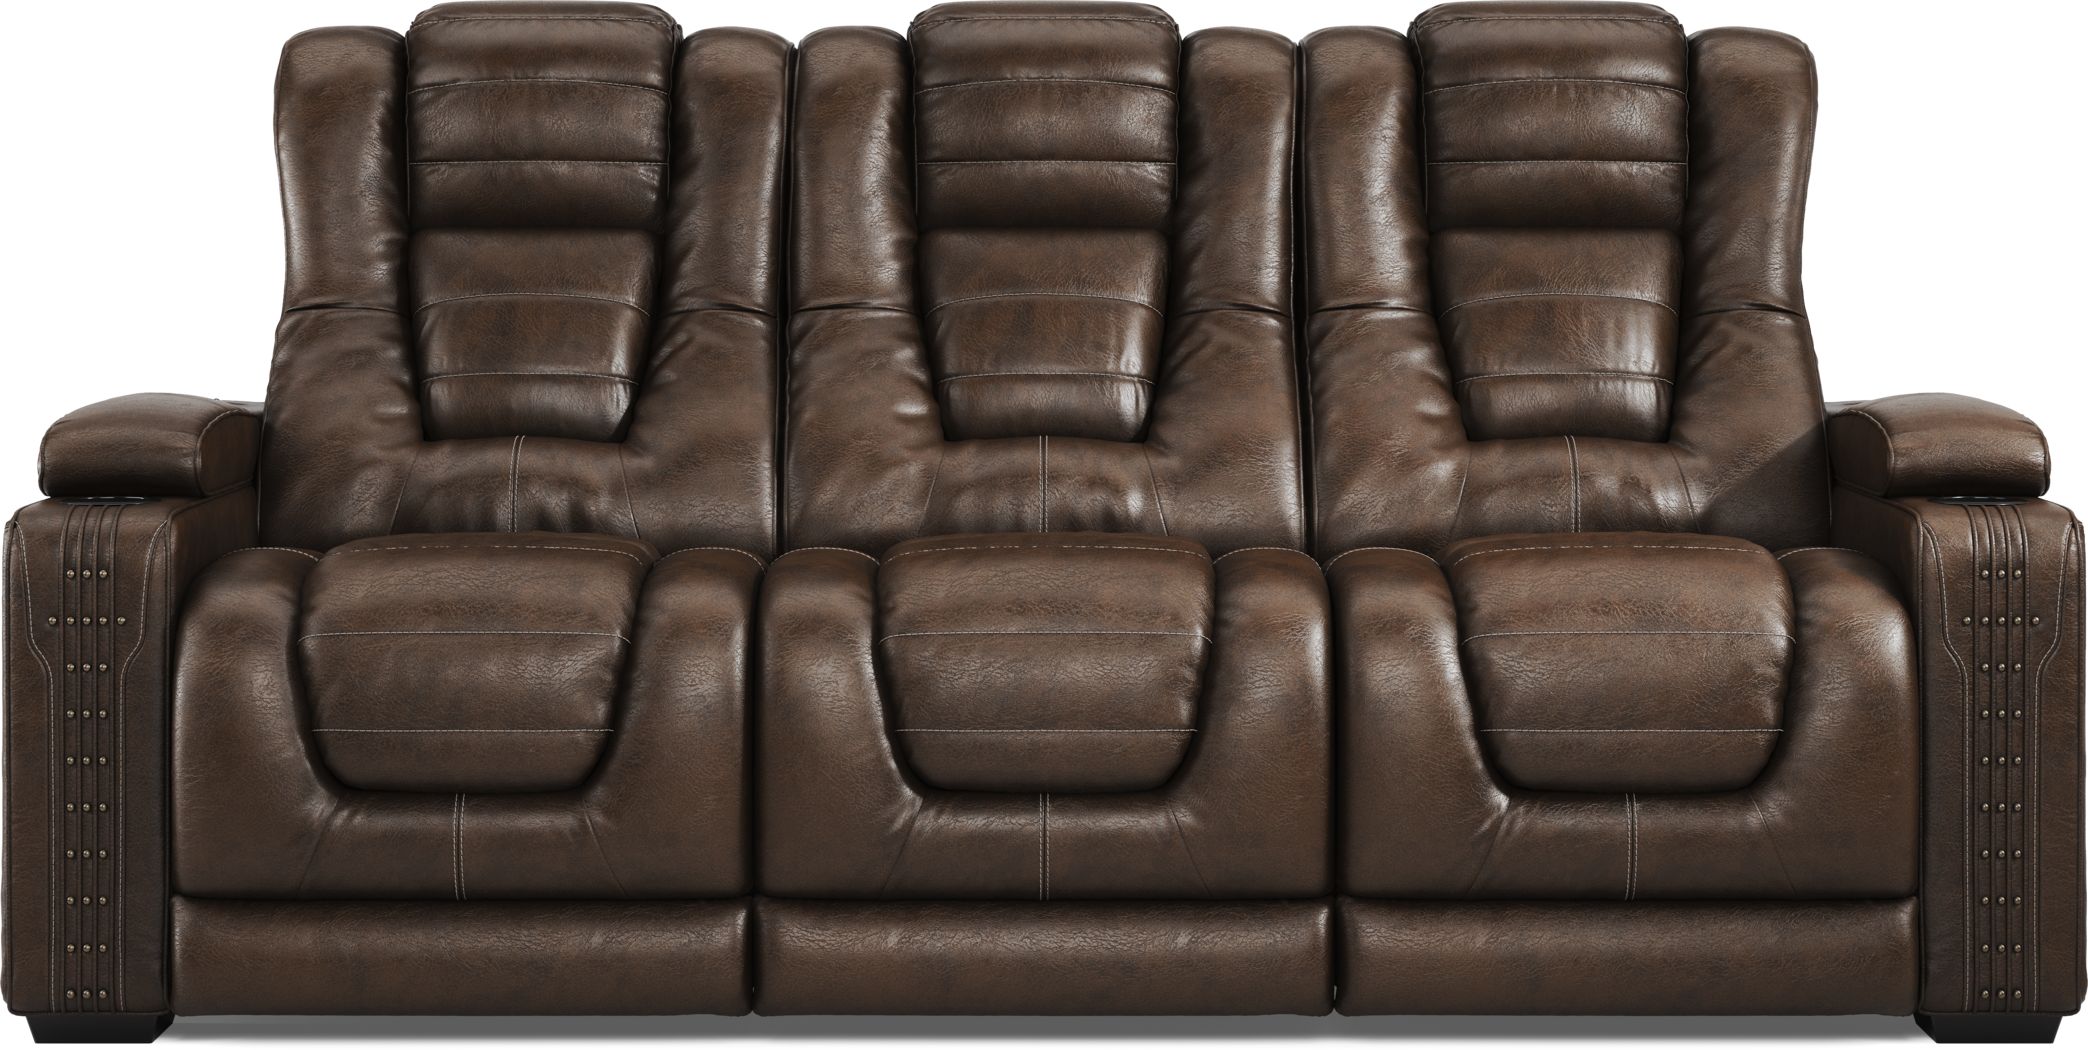 eric church power reclining sofa leather sofa review